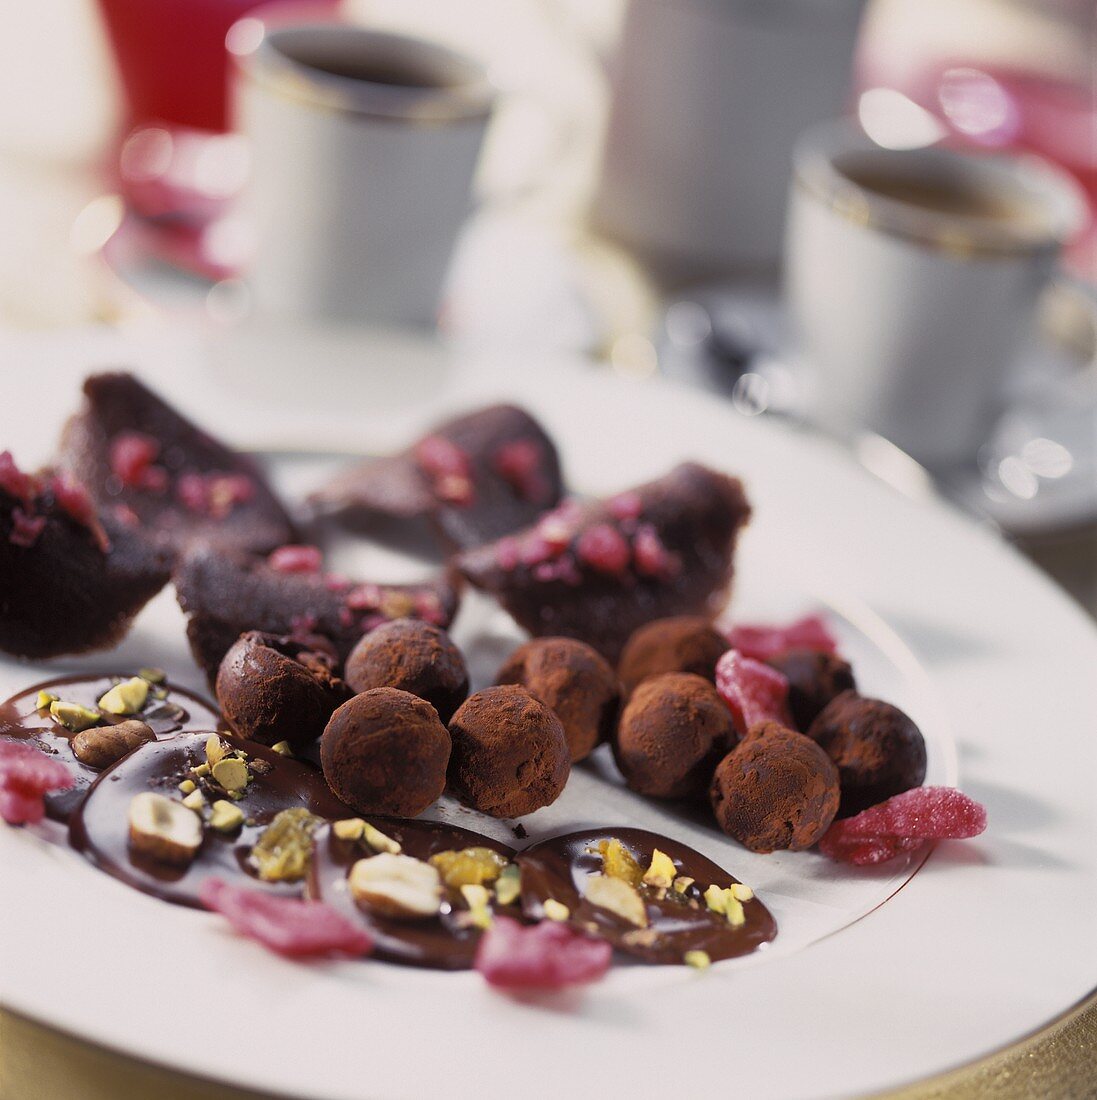 Chocolate truffles and chocolates with coffee